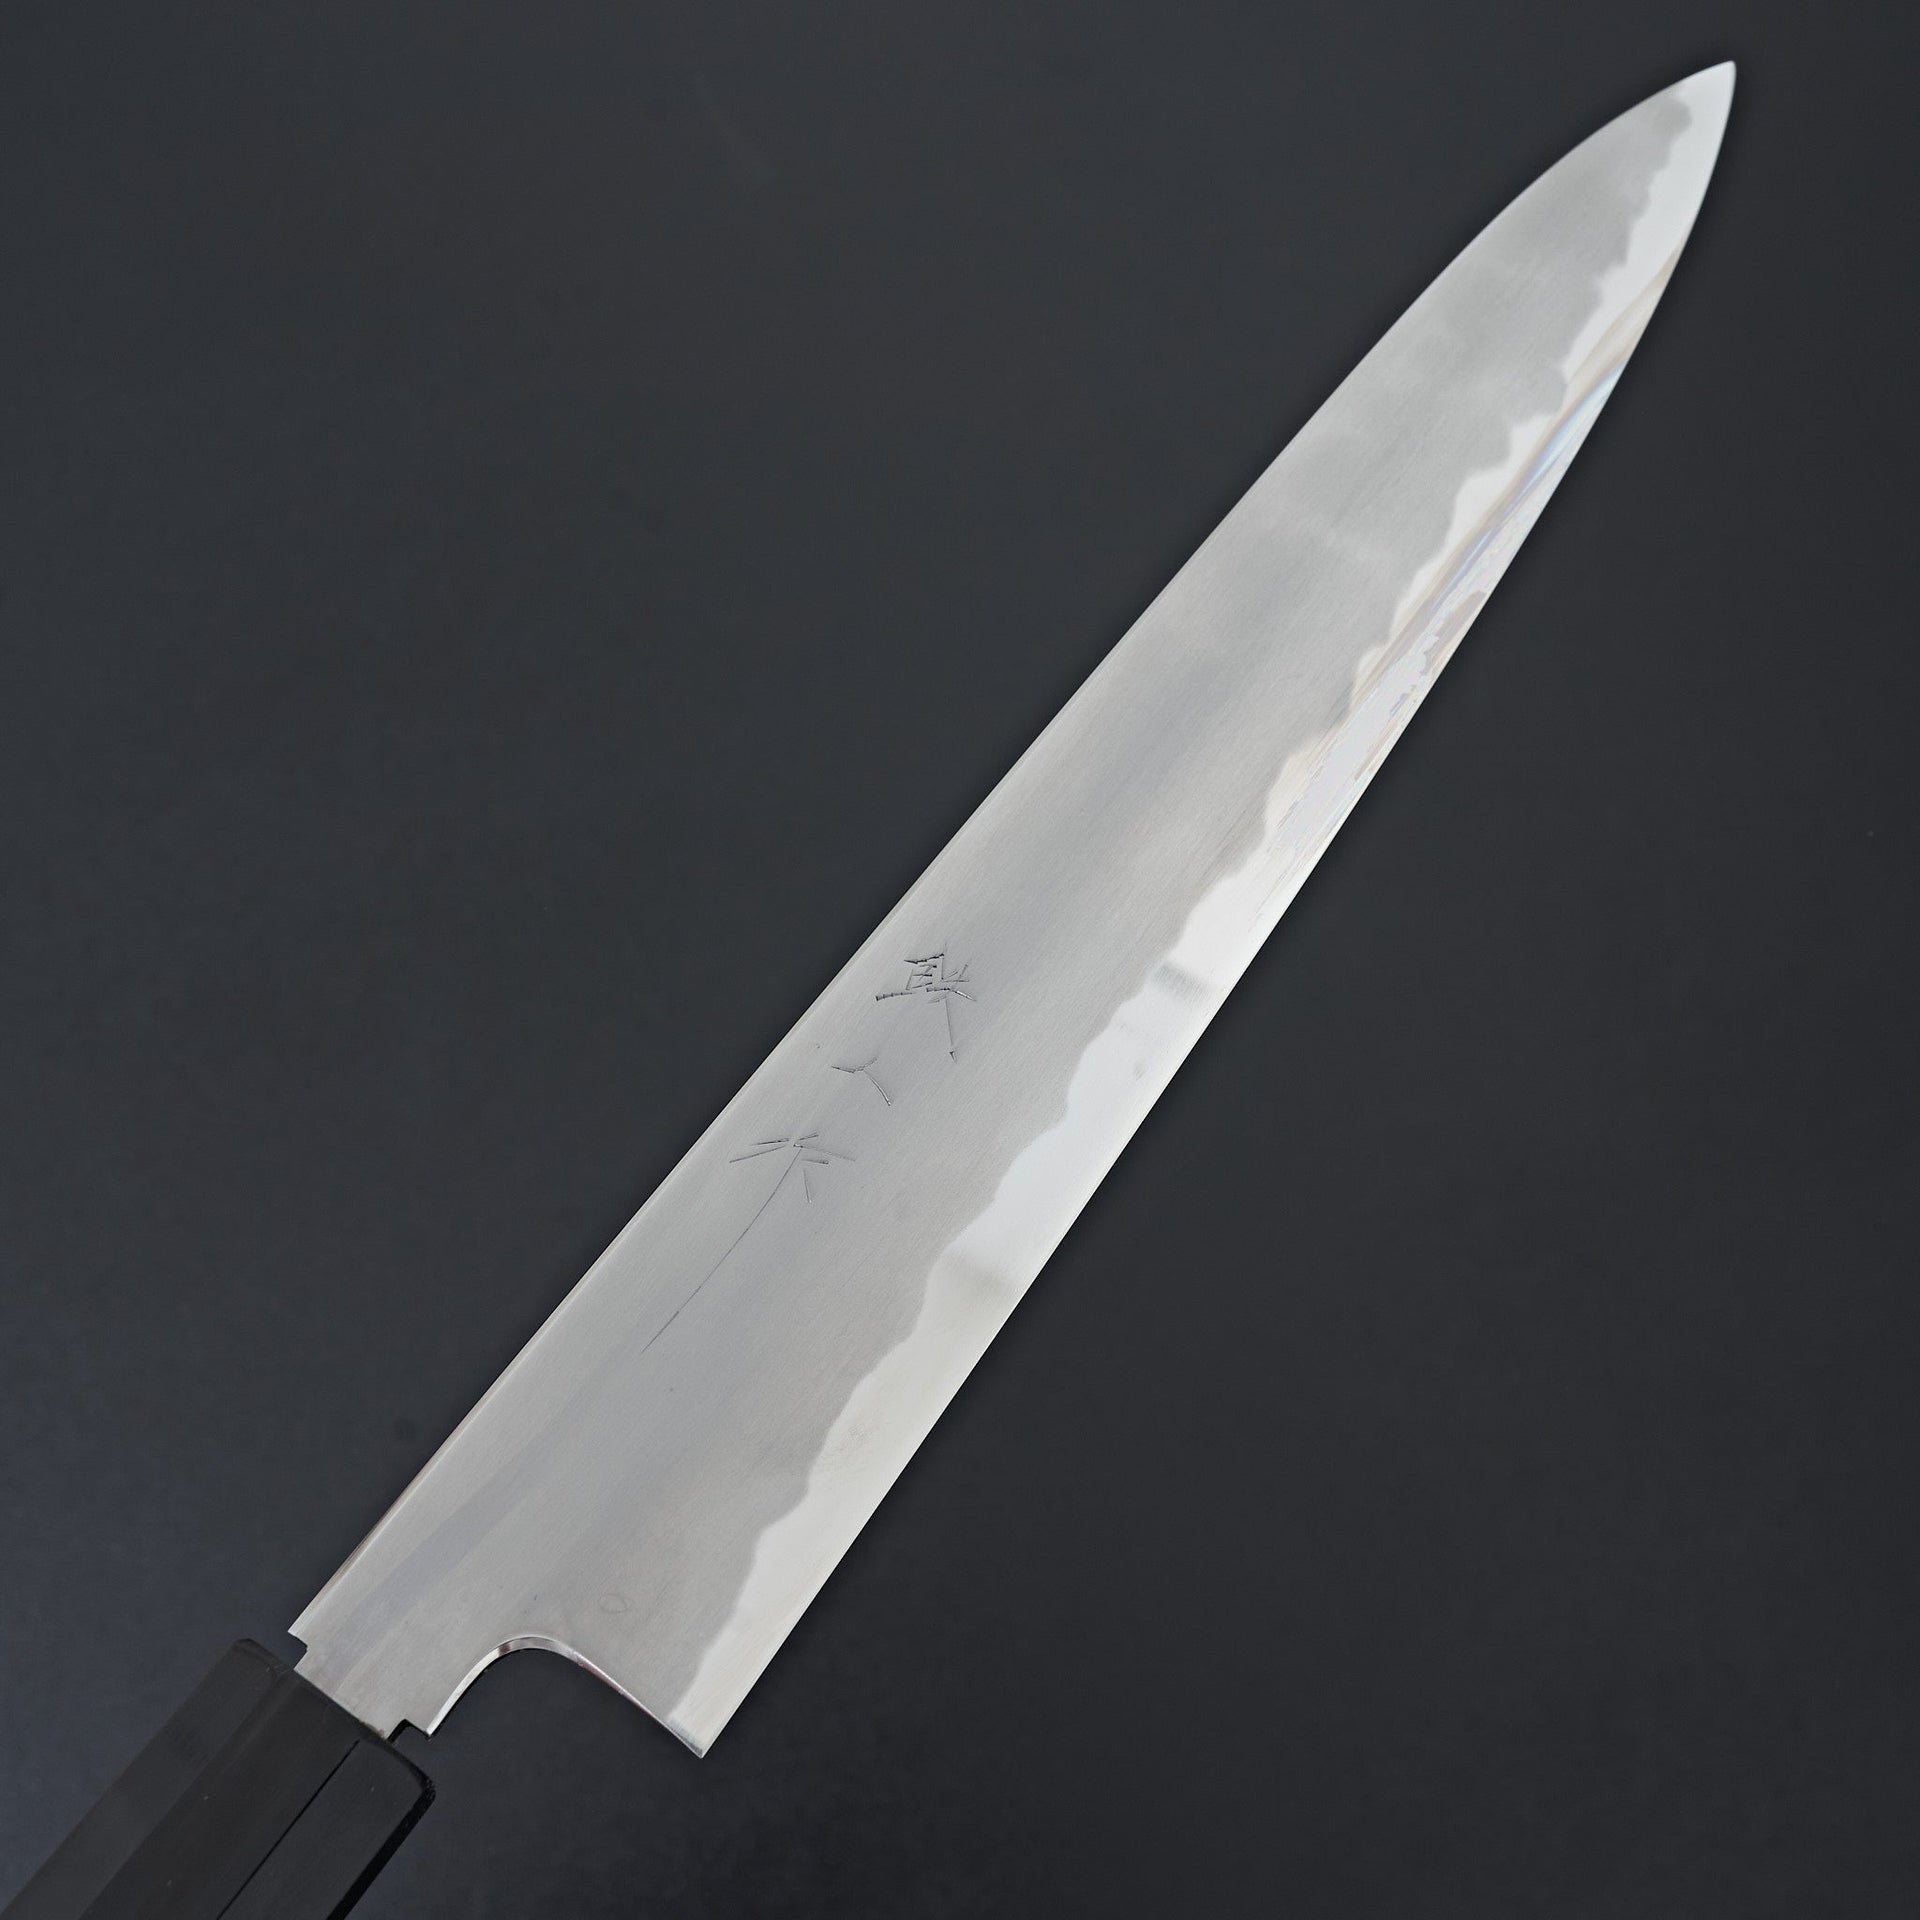 Tetsujin Blue #2 Kasumi Sujihiki 270mm Taihei Wood Handle-Knife-Hitohira-Carbon Knife Co